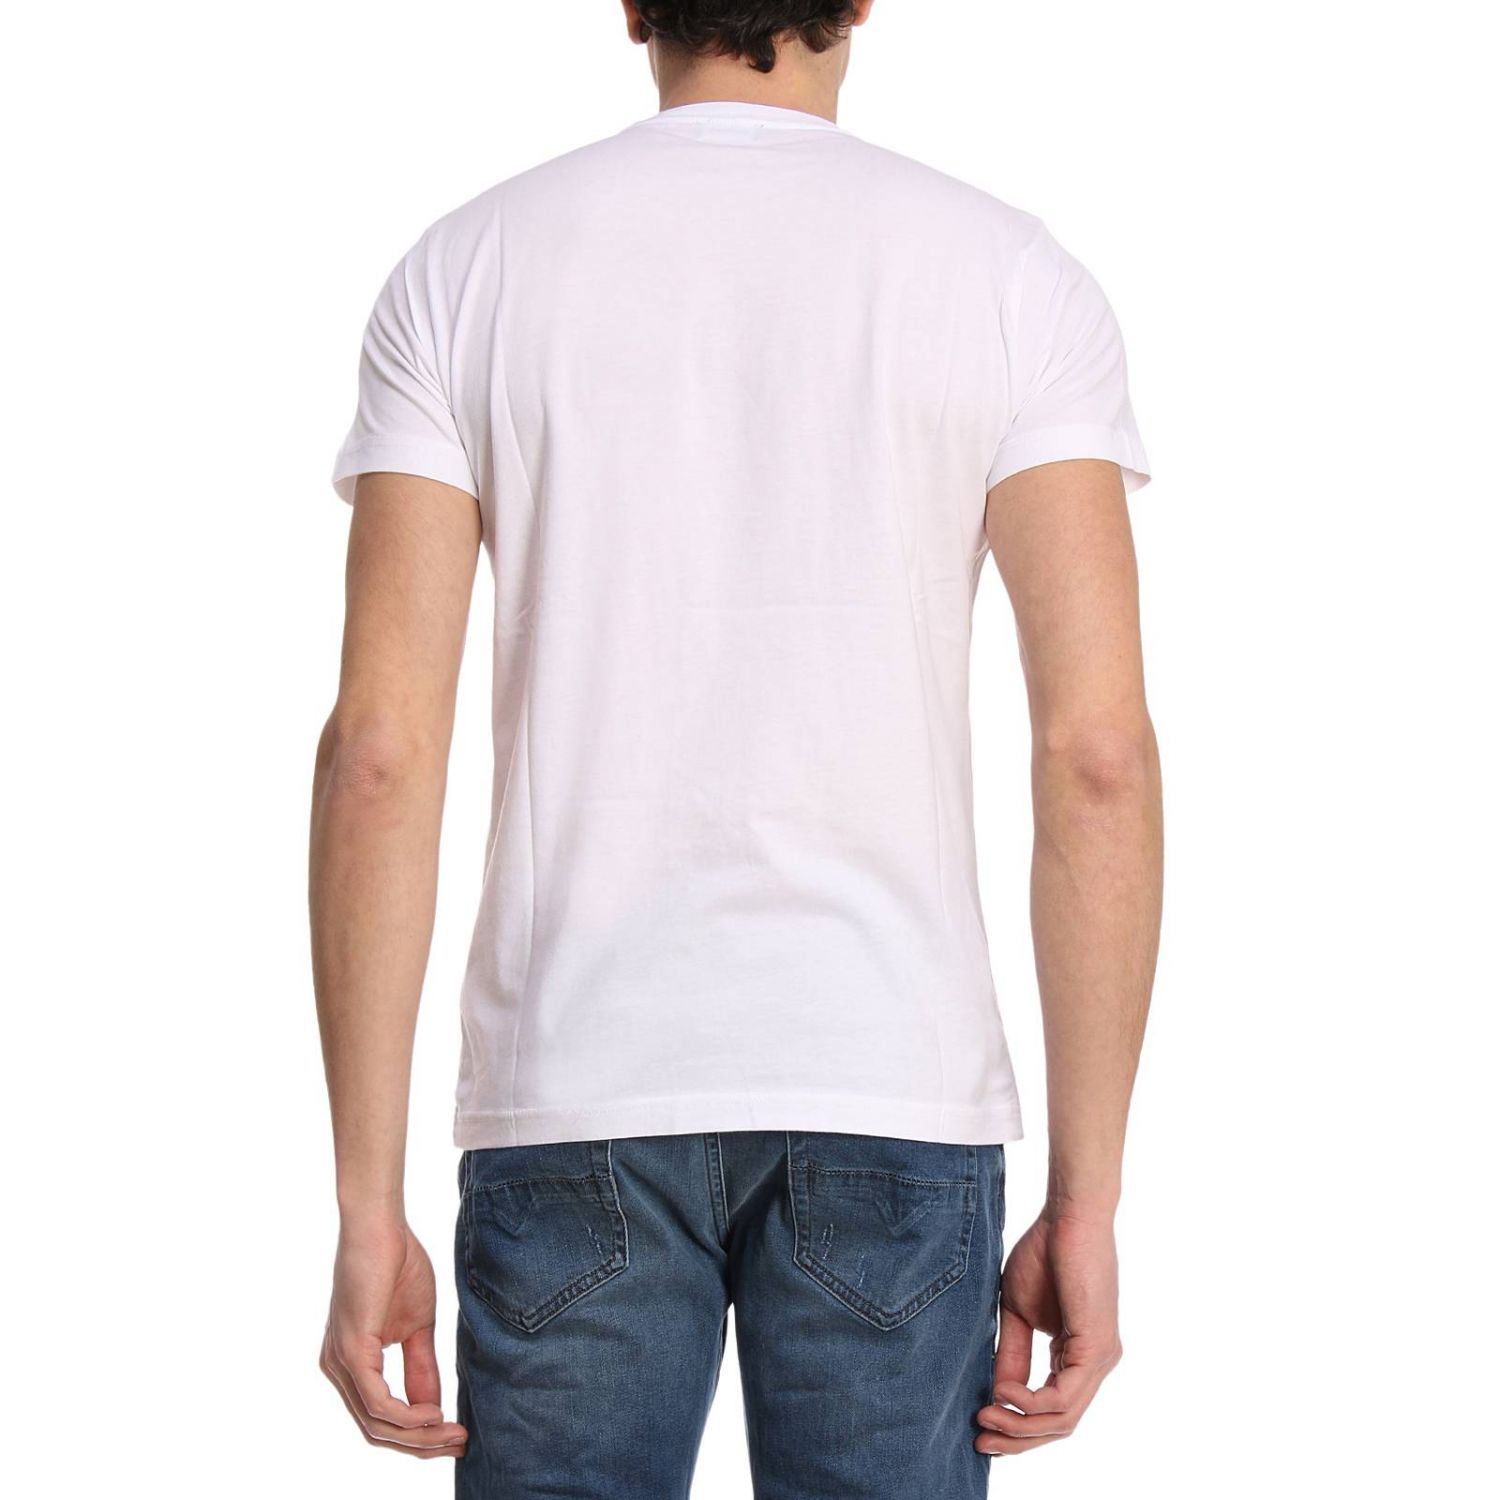 Diesel Outlet: T-shirt men | T-Shirt Diesel Men White | T-Shirt Diesel ...